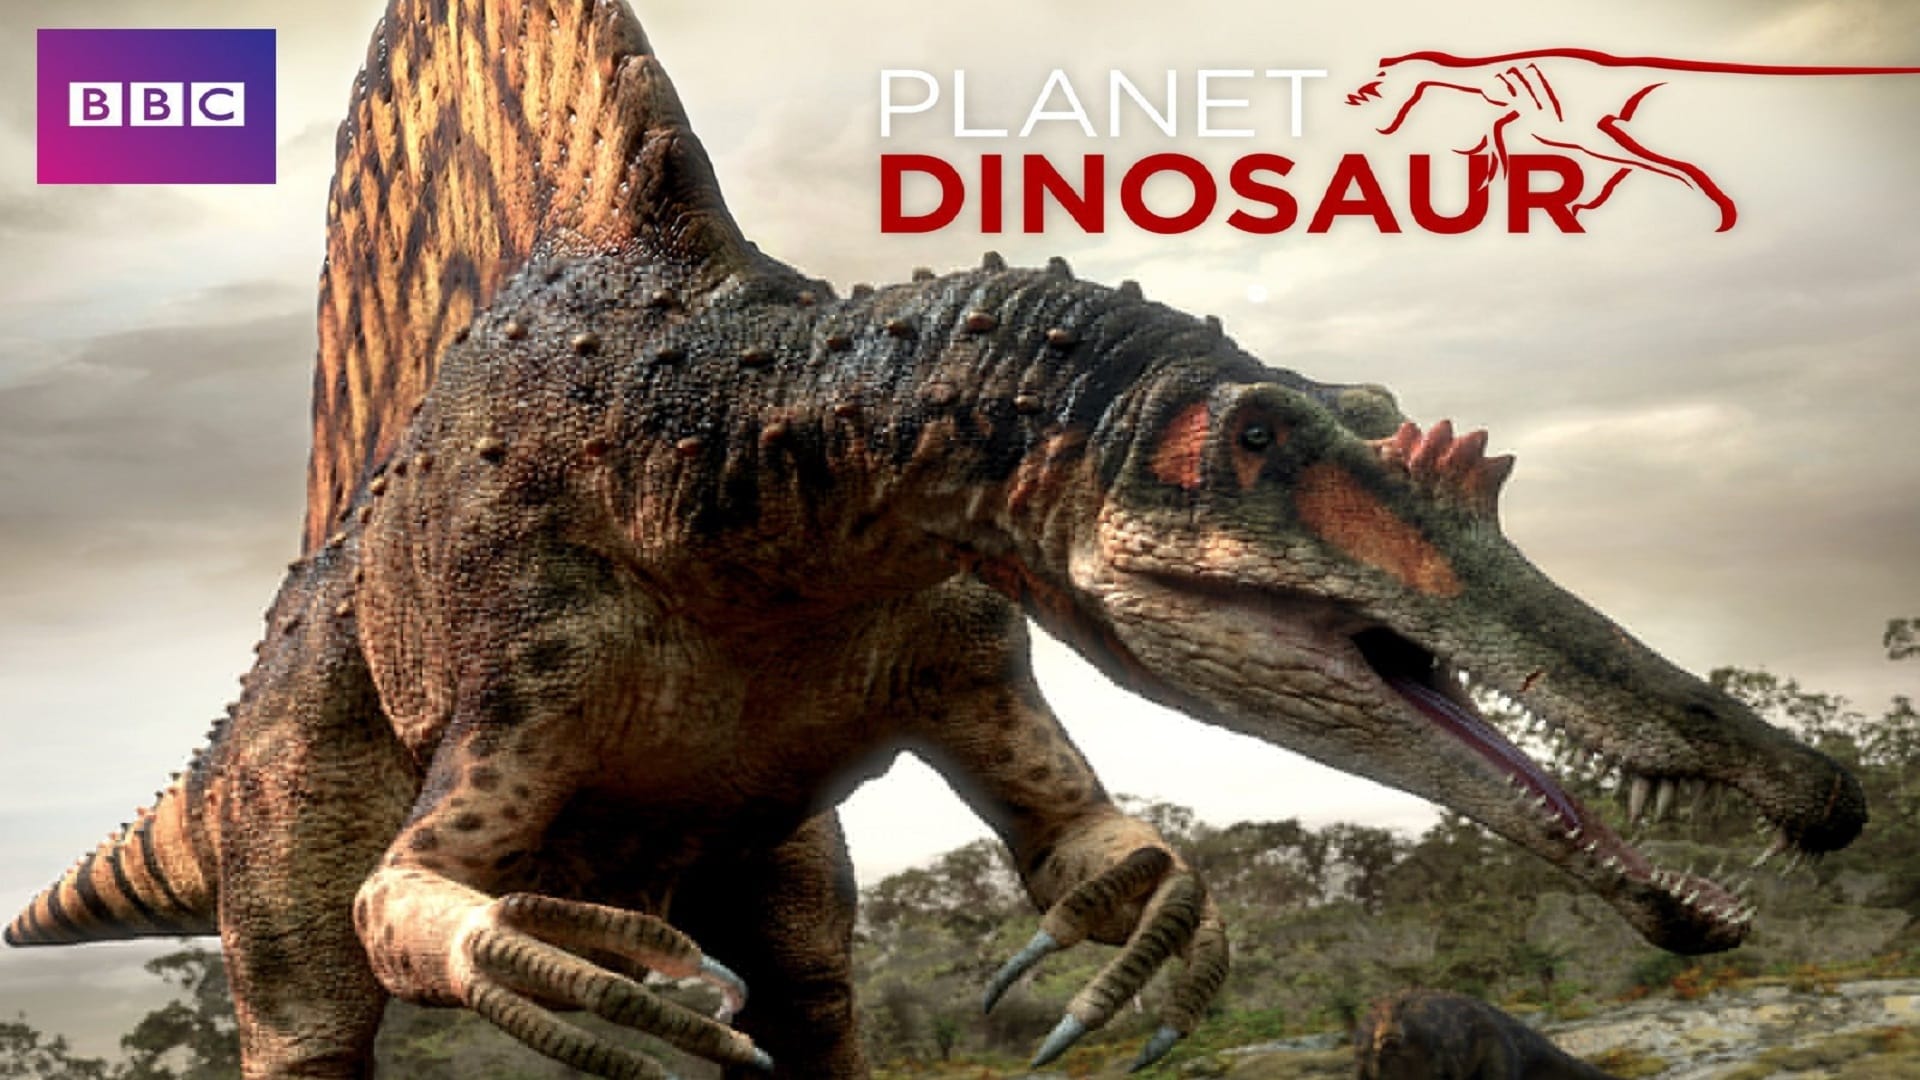 Dinoszauruszok Bolygója - Szuper Gyilkosok